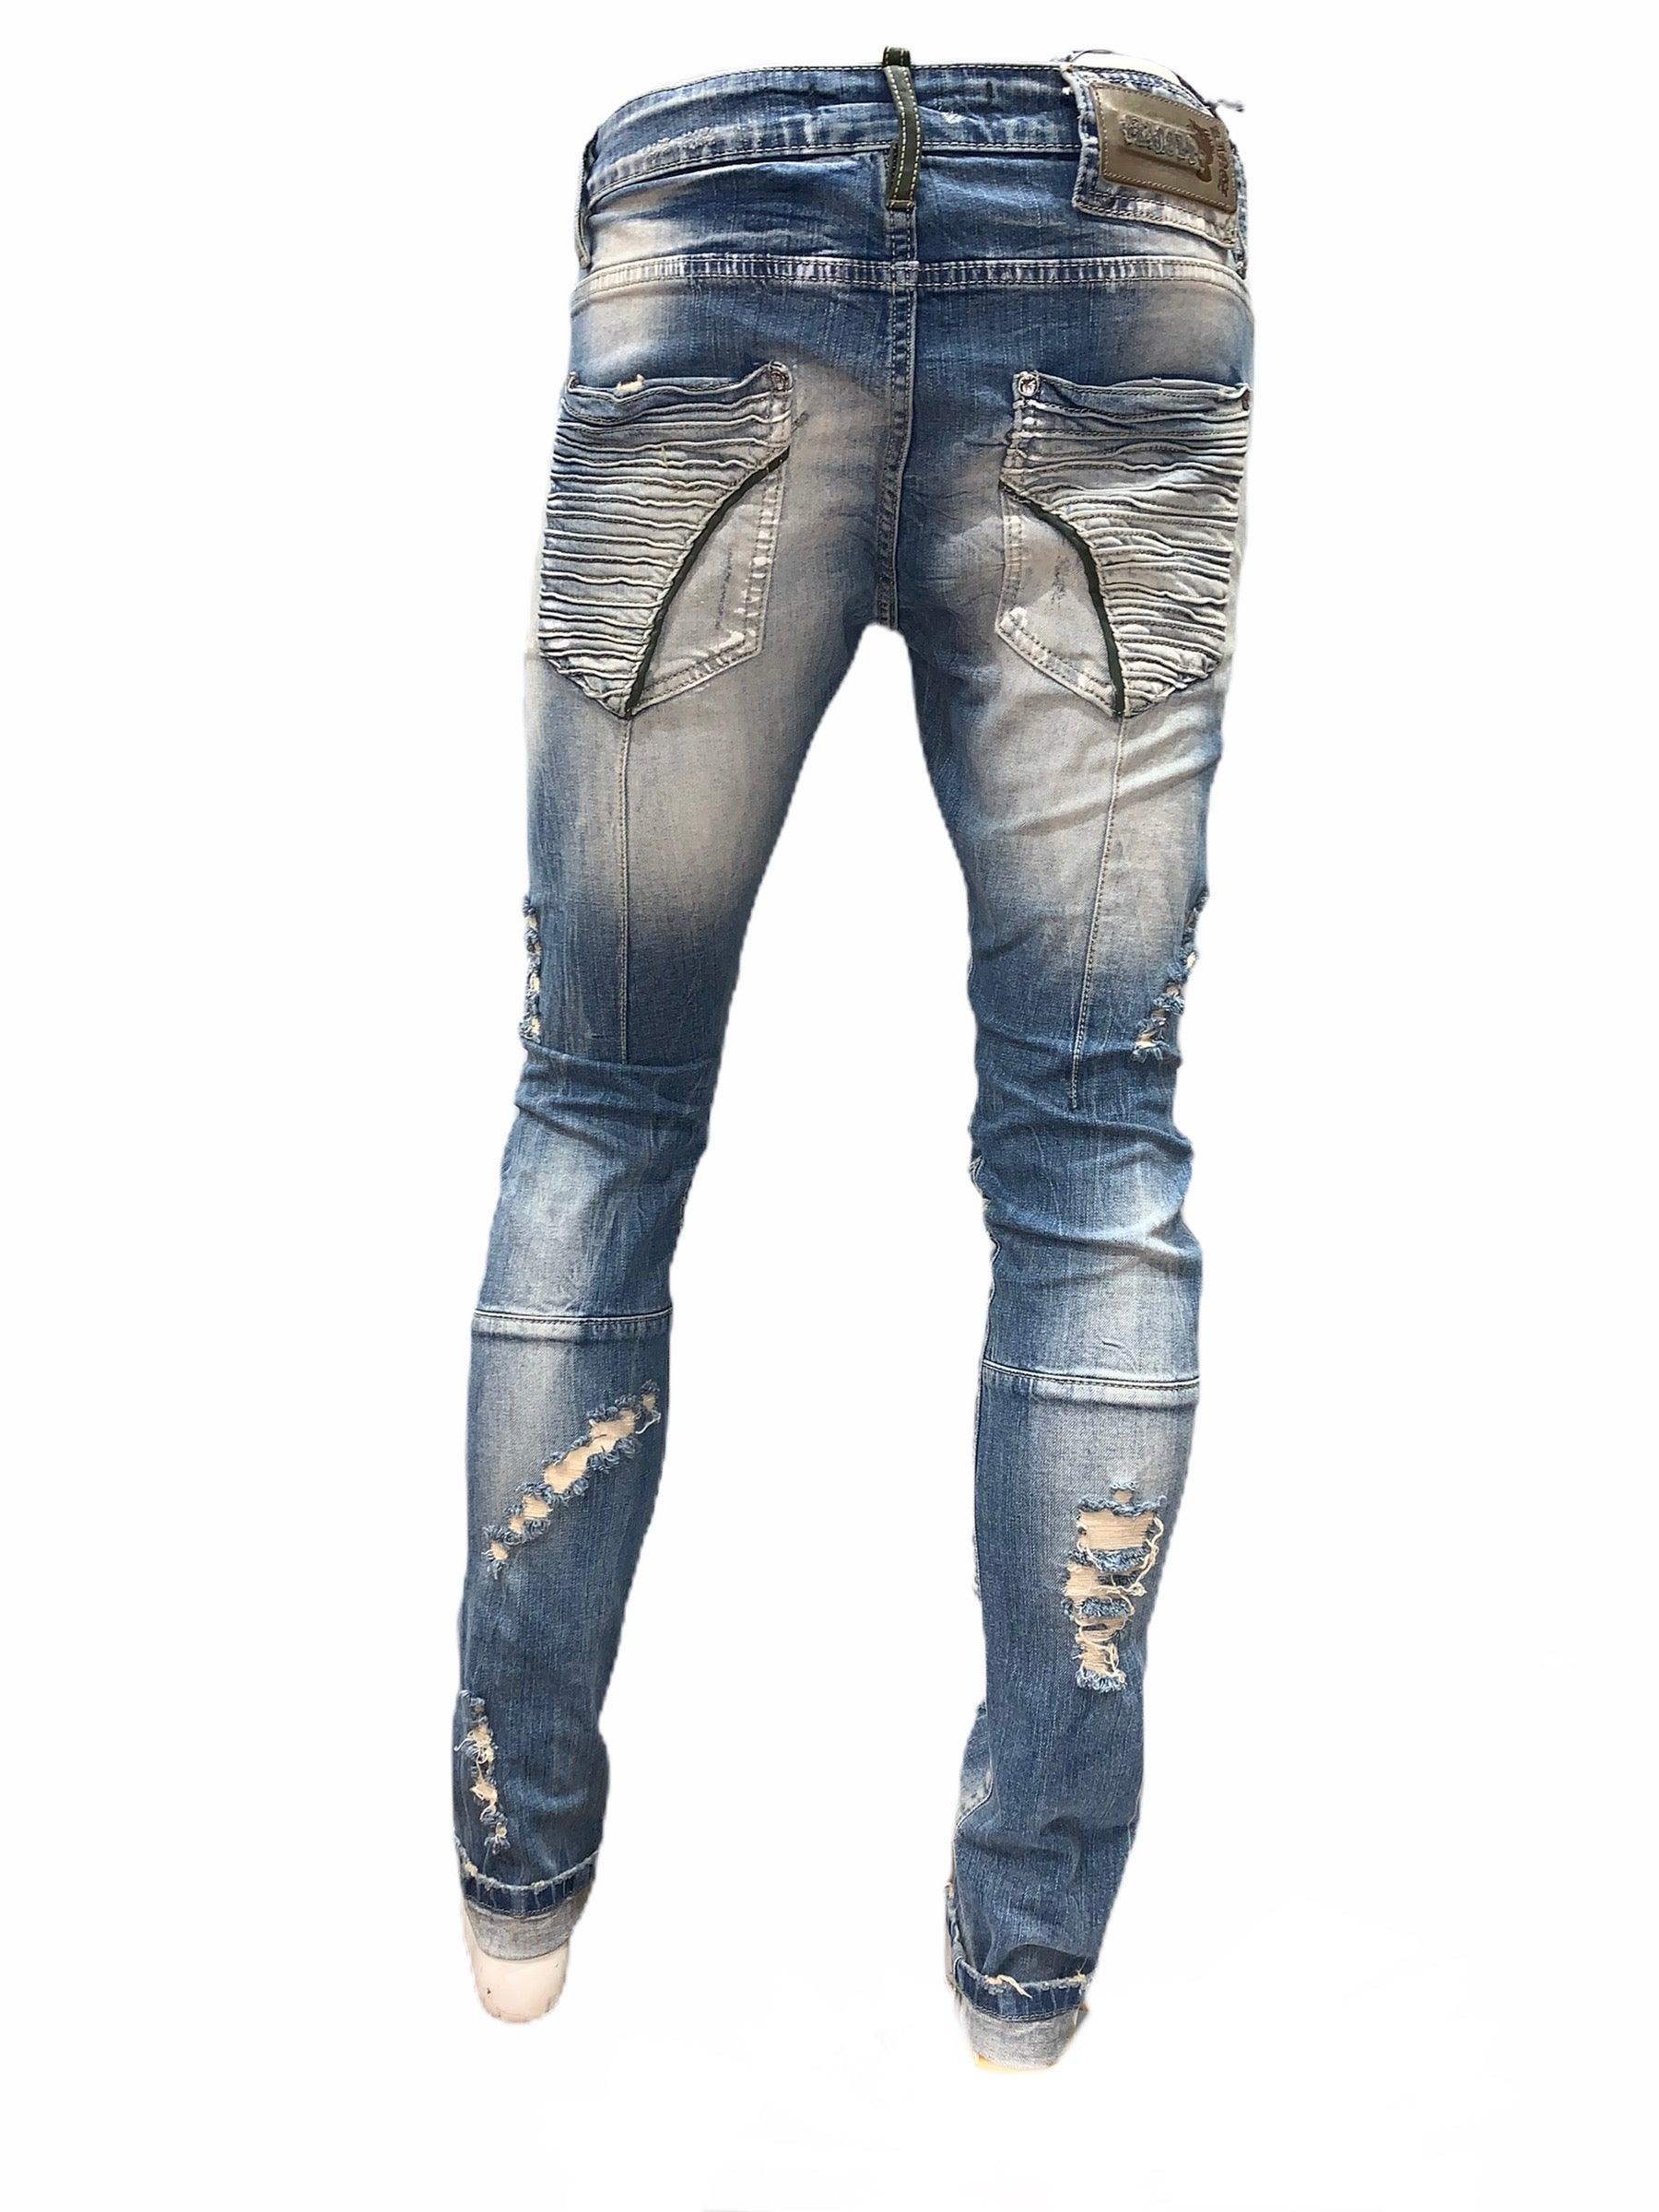 Men's Jeans | Denim Republic